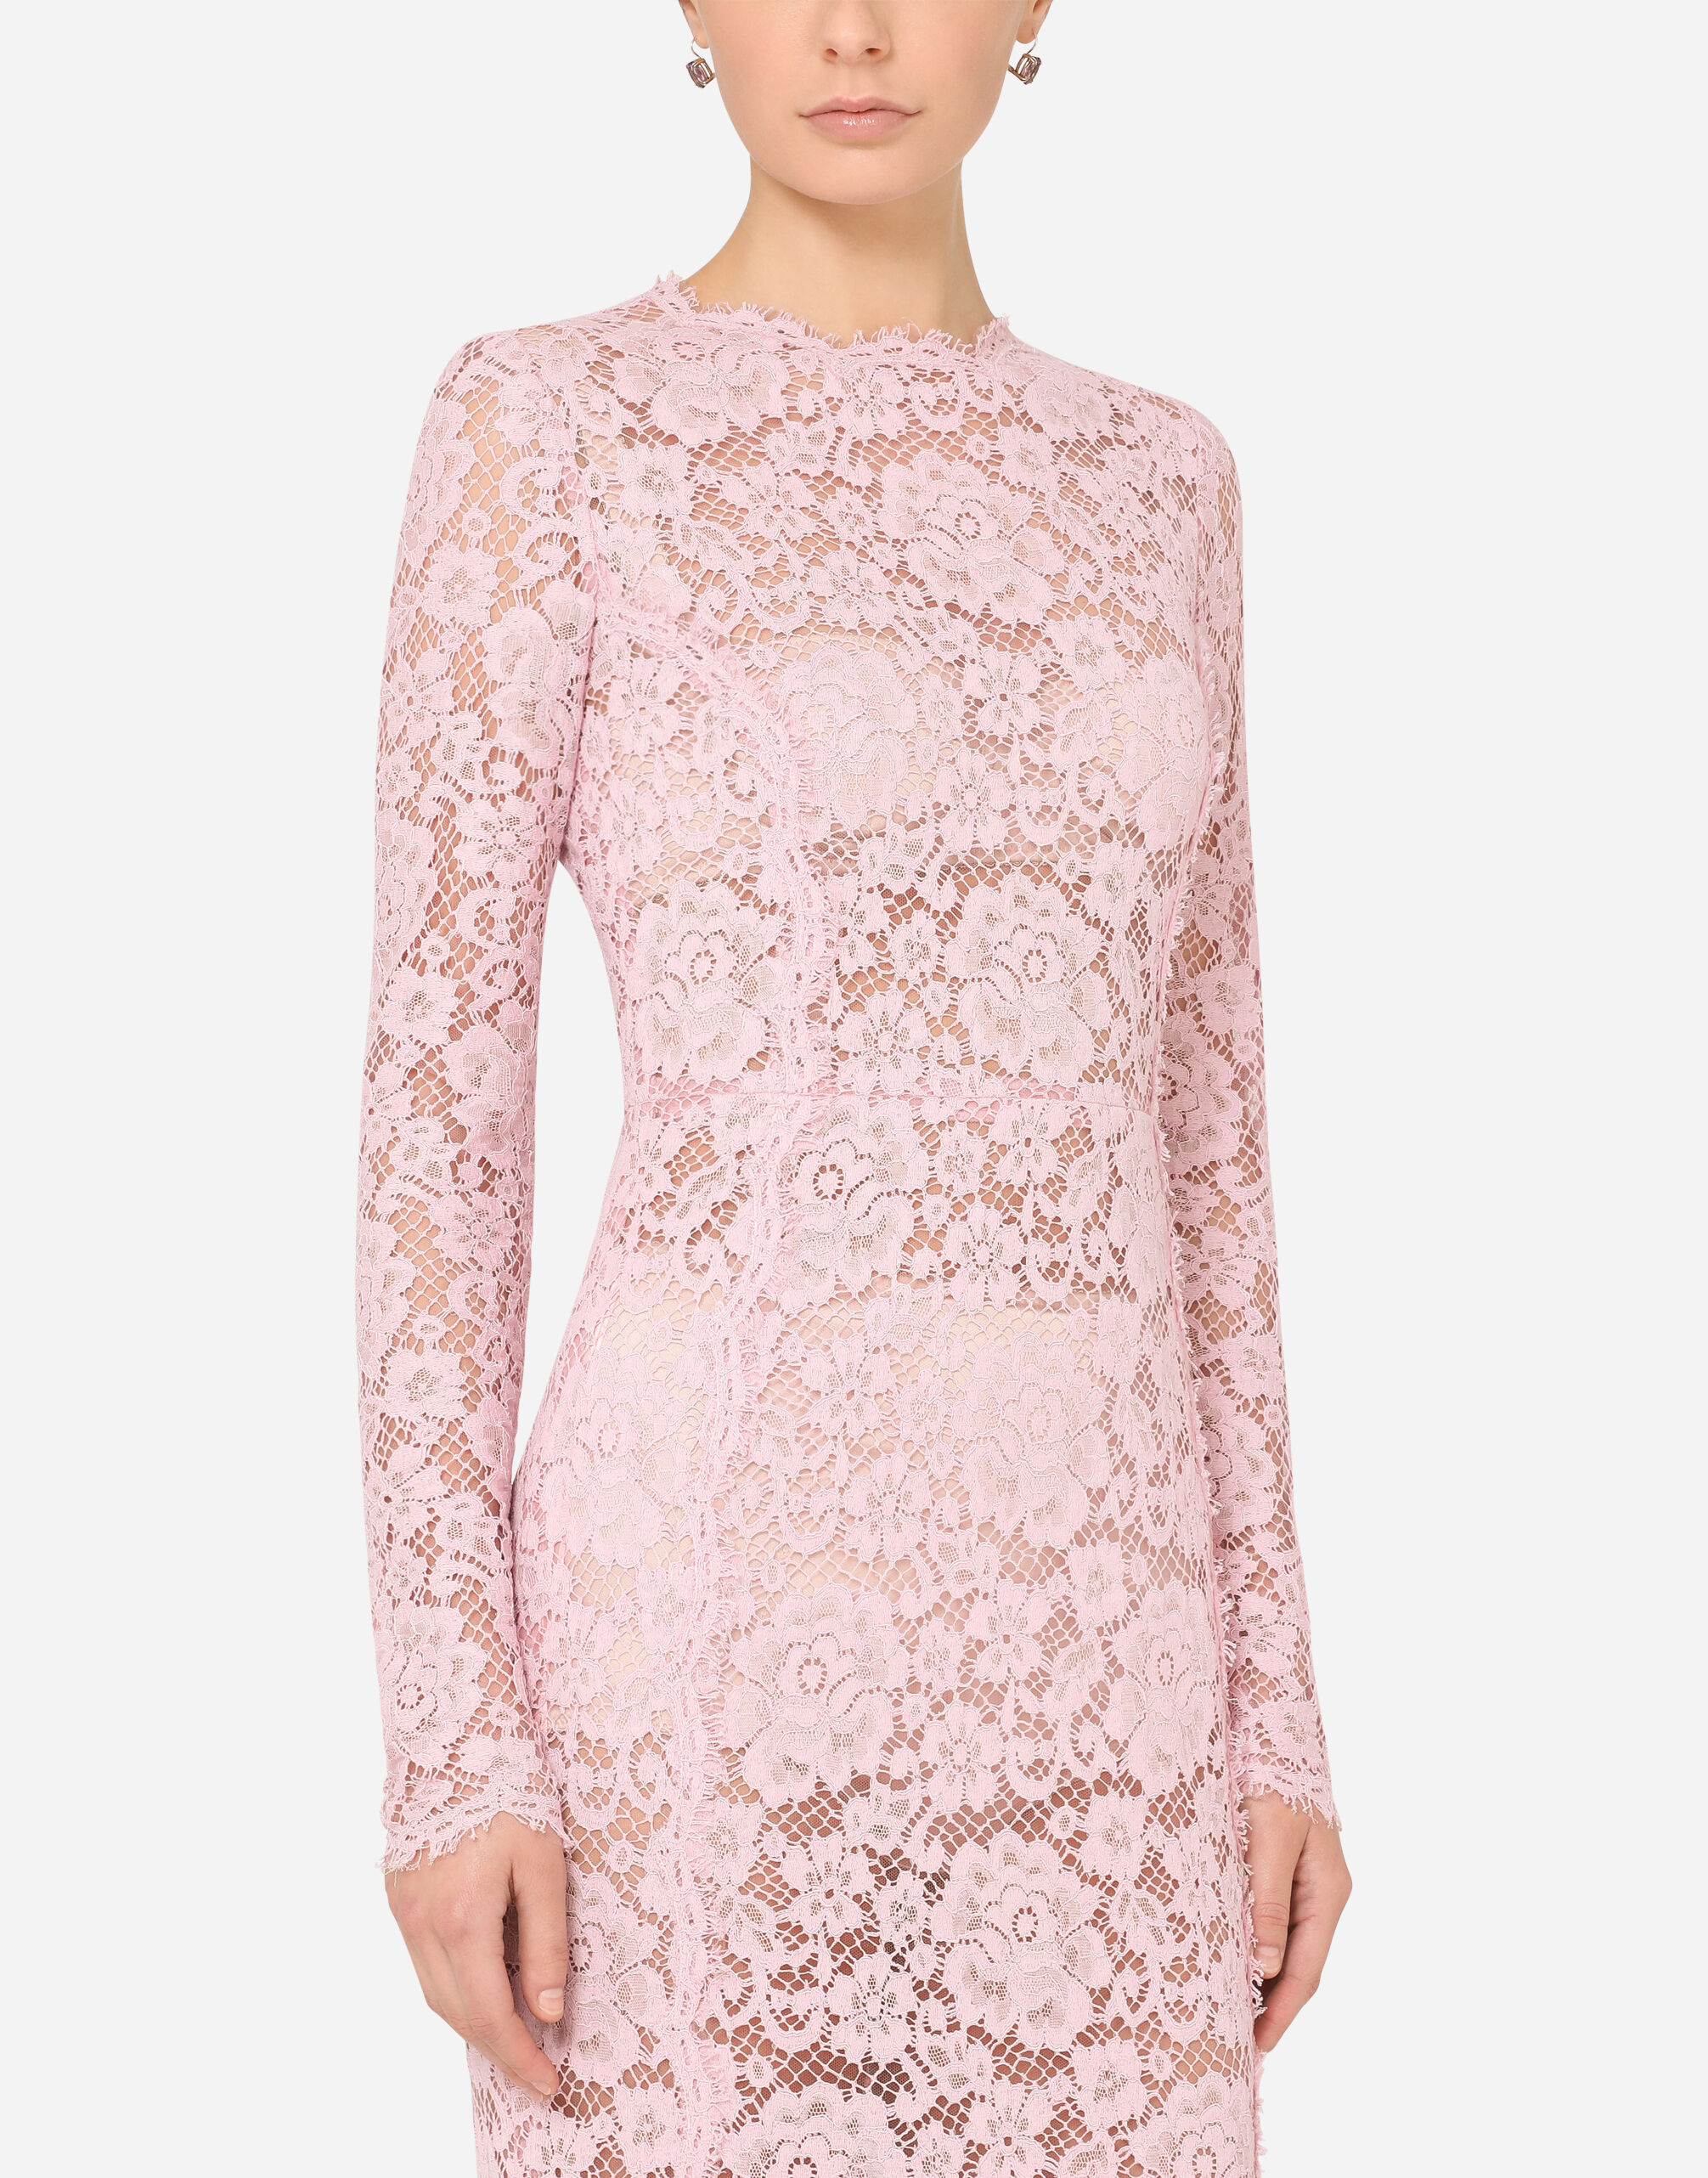 Dolce and Gabbana Lace Dress